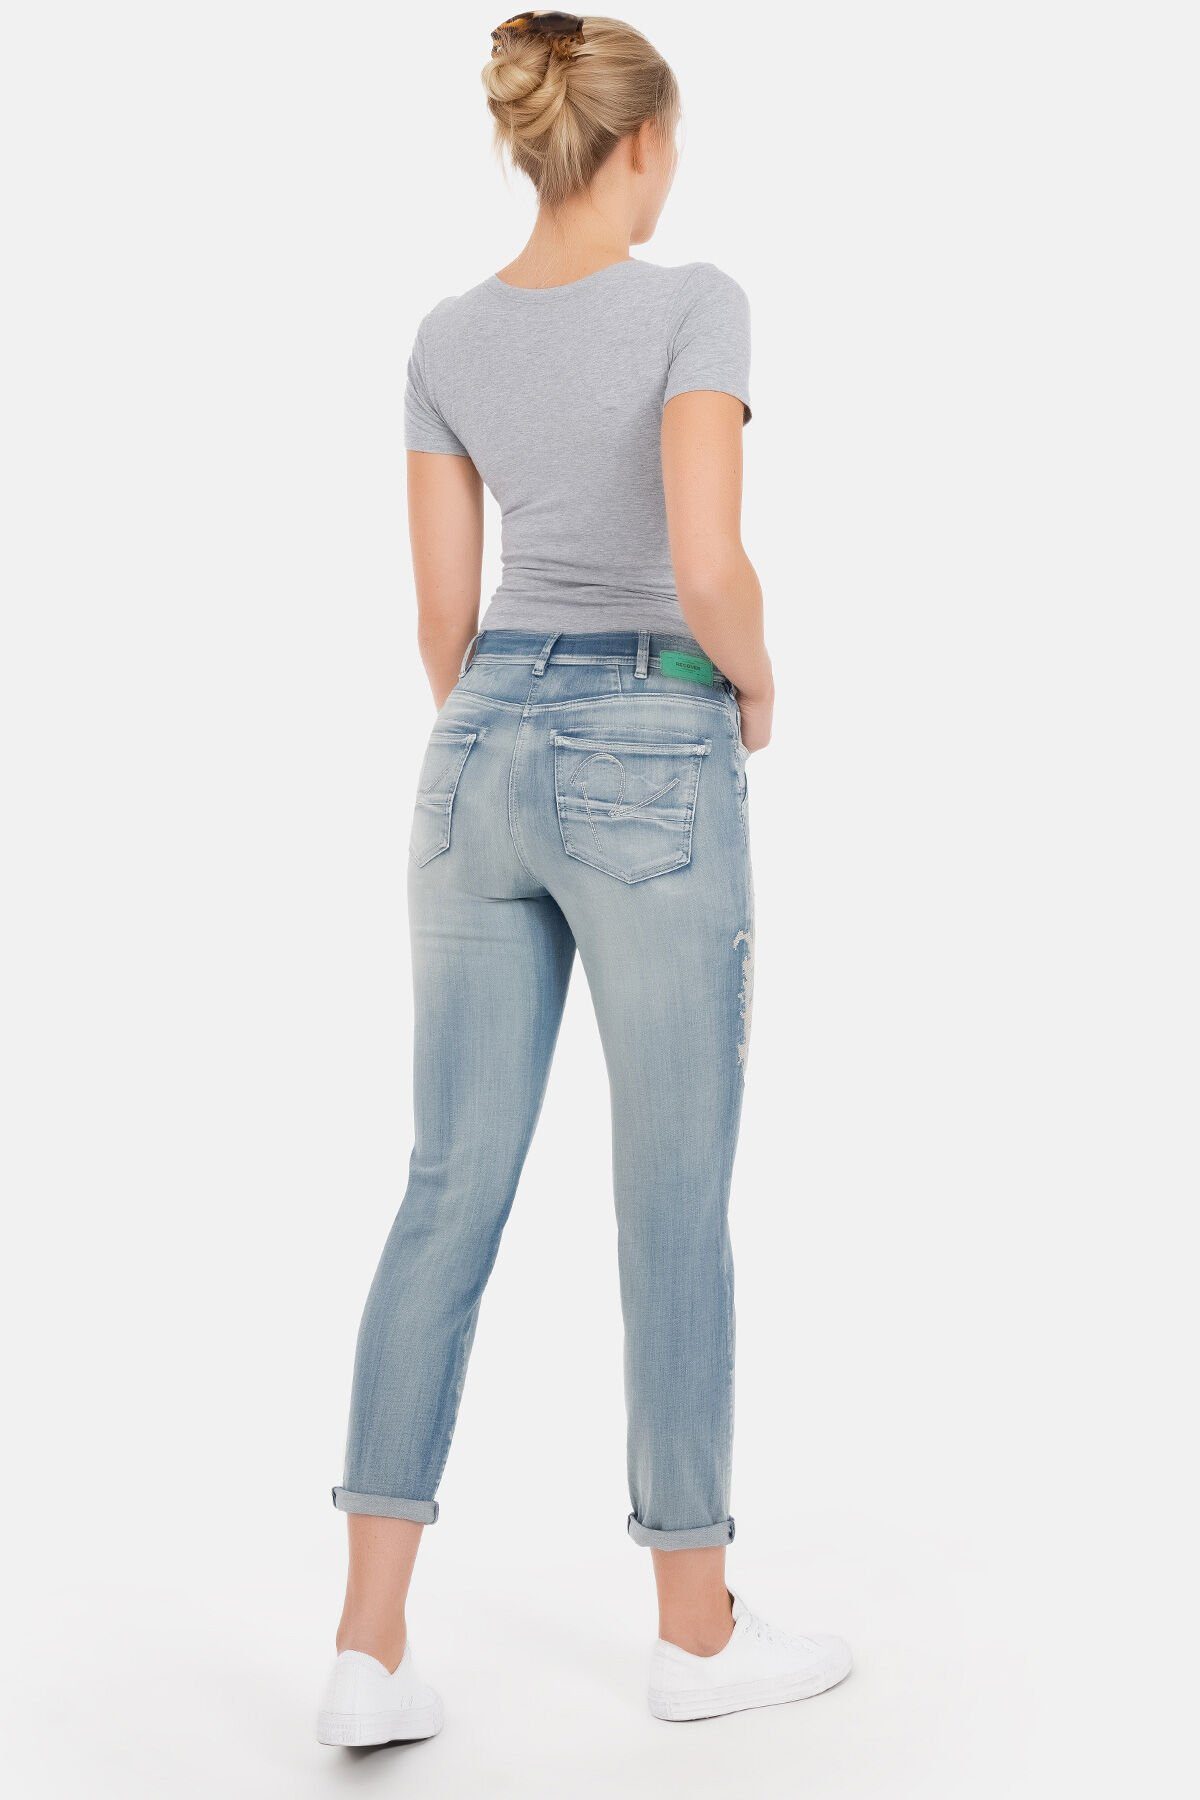 Jessi Stickereien Recover Pants mit Slim-fit-Jeans